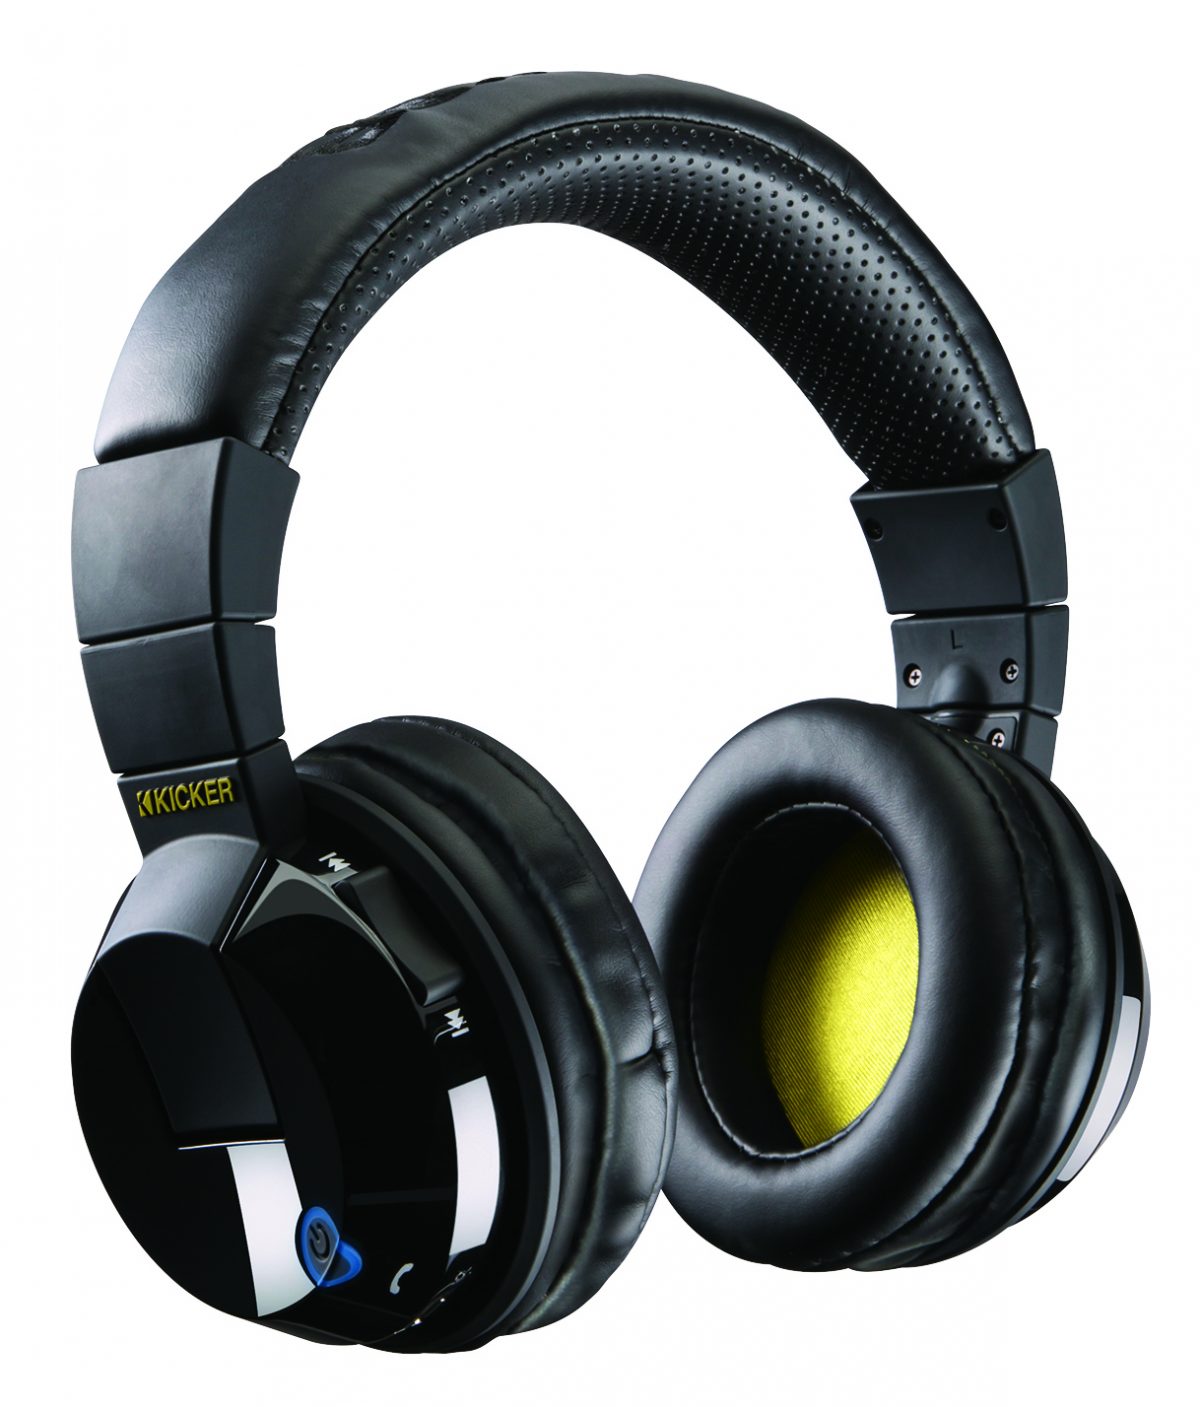 Kicker's Tabor HP402BT Bluetooth Headphones Review